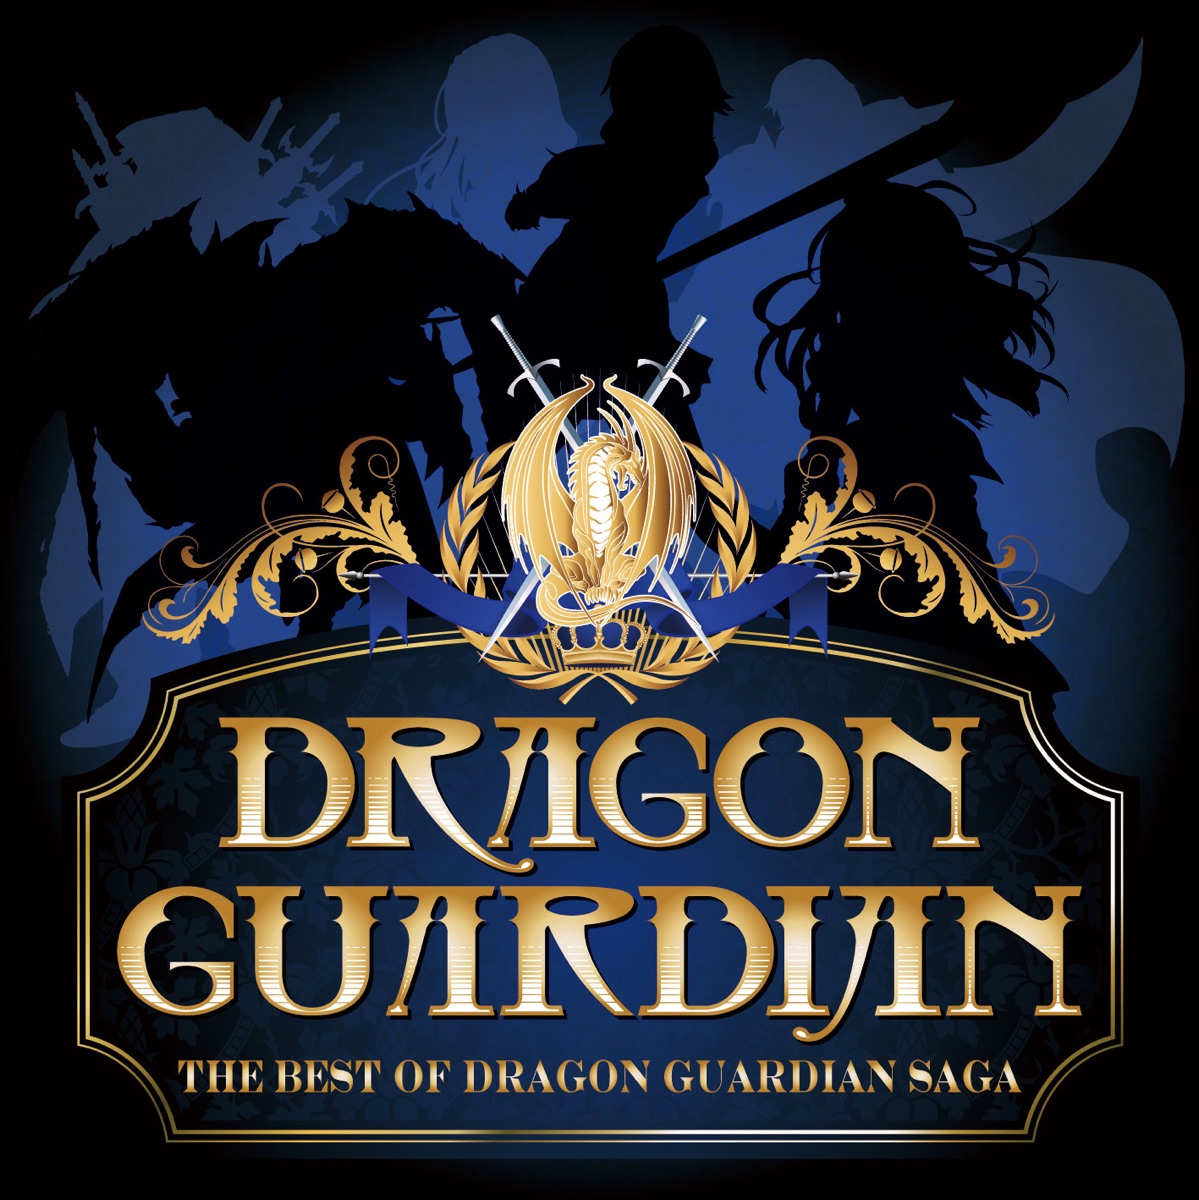 THE BEST OF DRAGON GUARDIAN SAGA - Album by Dragon Guardian